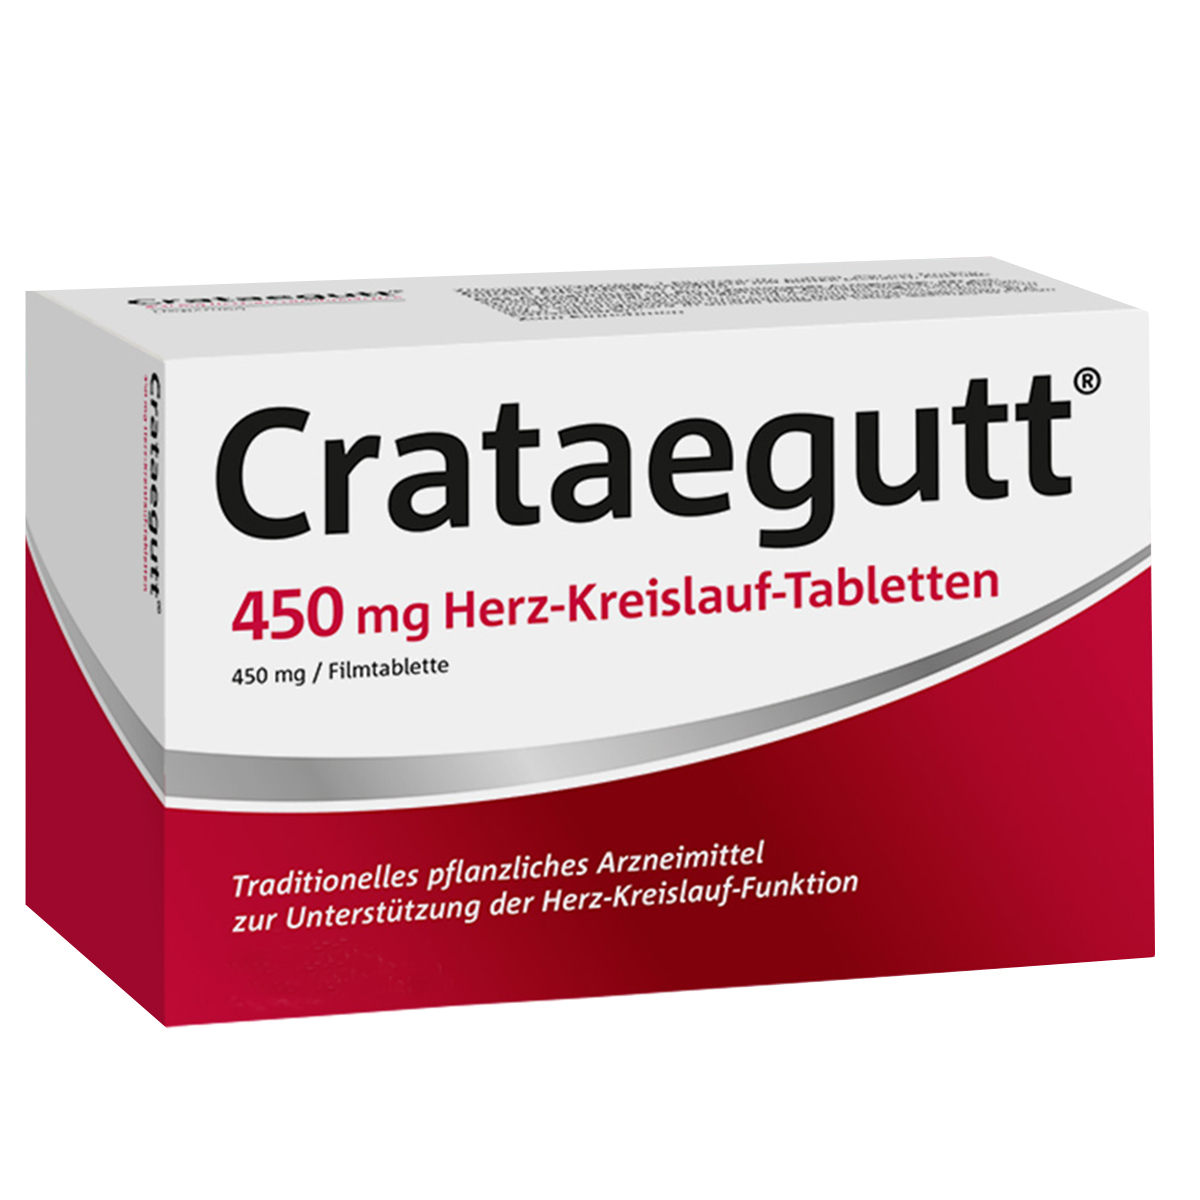 Crataegutt 450 Herz-Kreislauf-Tabletten, Кратегутт 450 мг, сердечные таблетки покрытые пленочной оболочкой, 100 шт